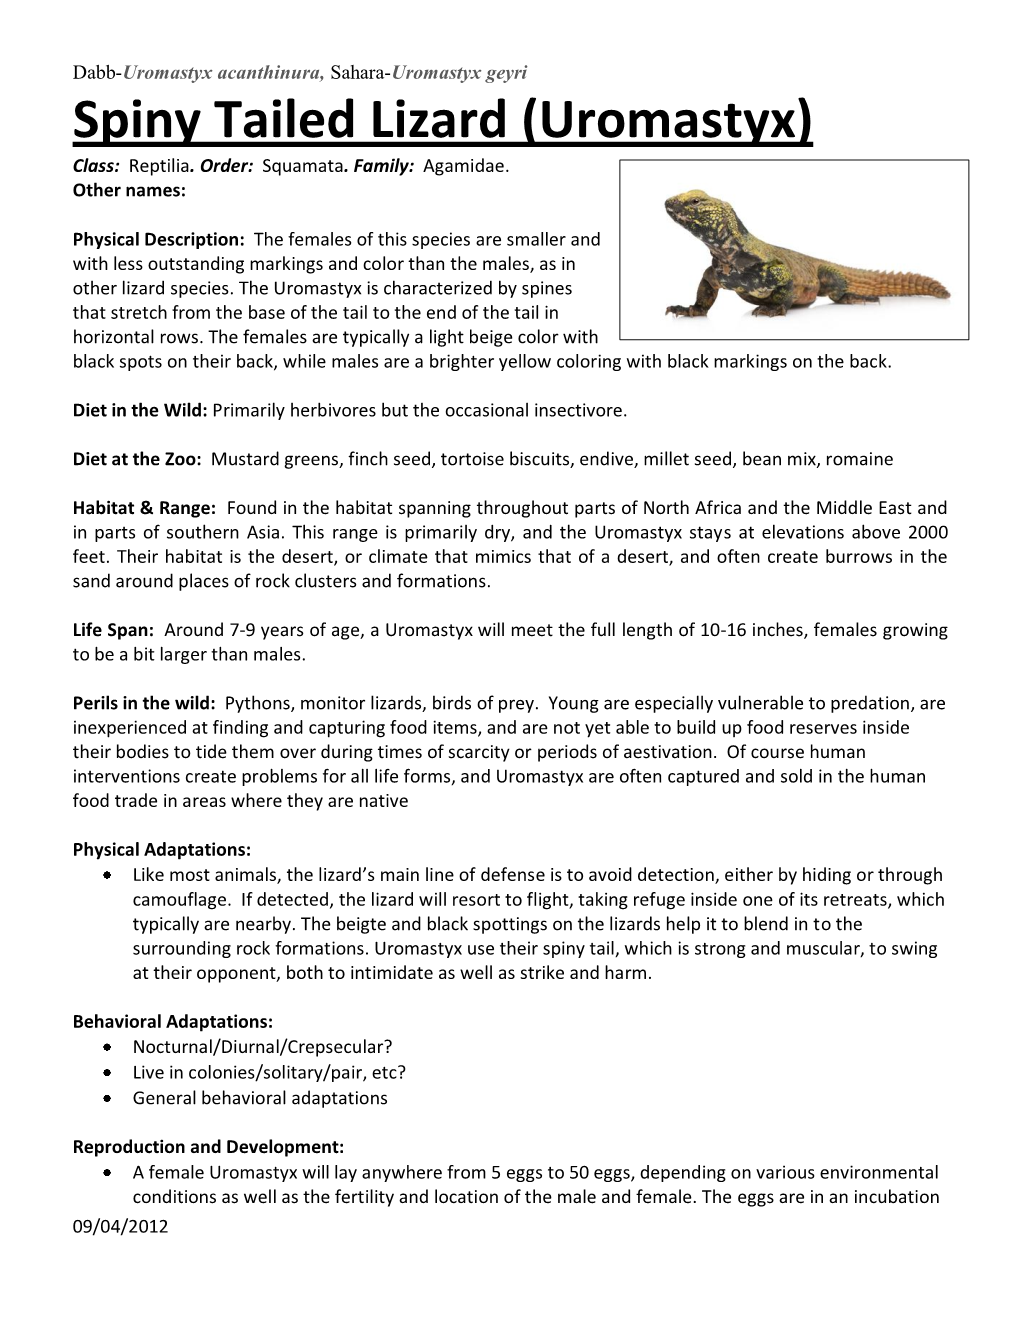 Spiny Tailed Lizard (Uromastyx) Class: Reptilia